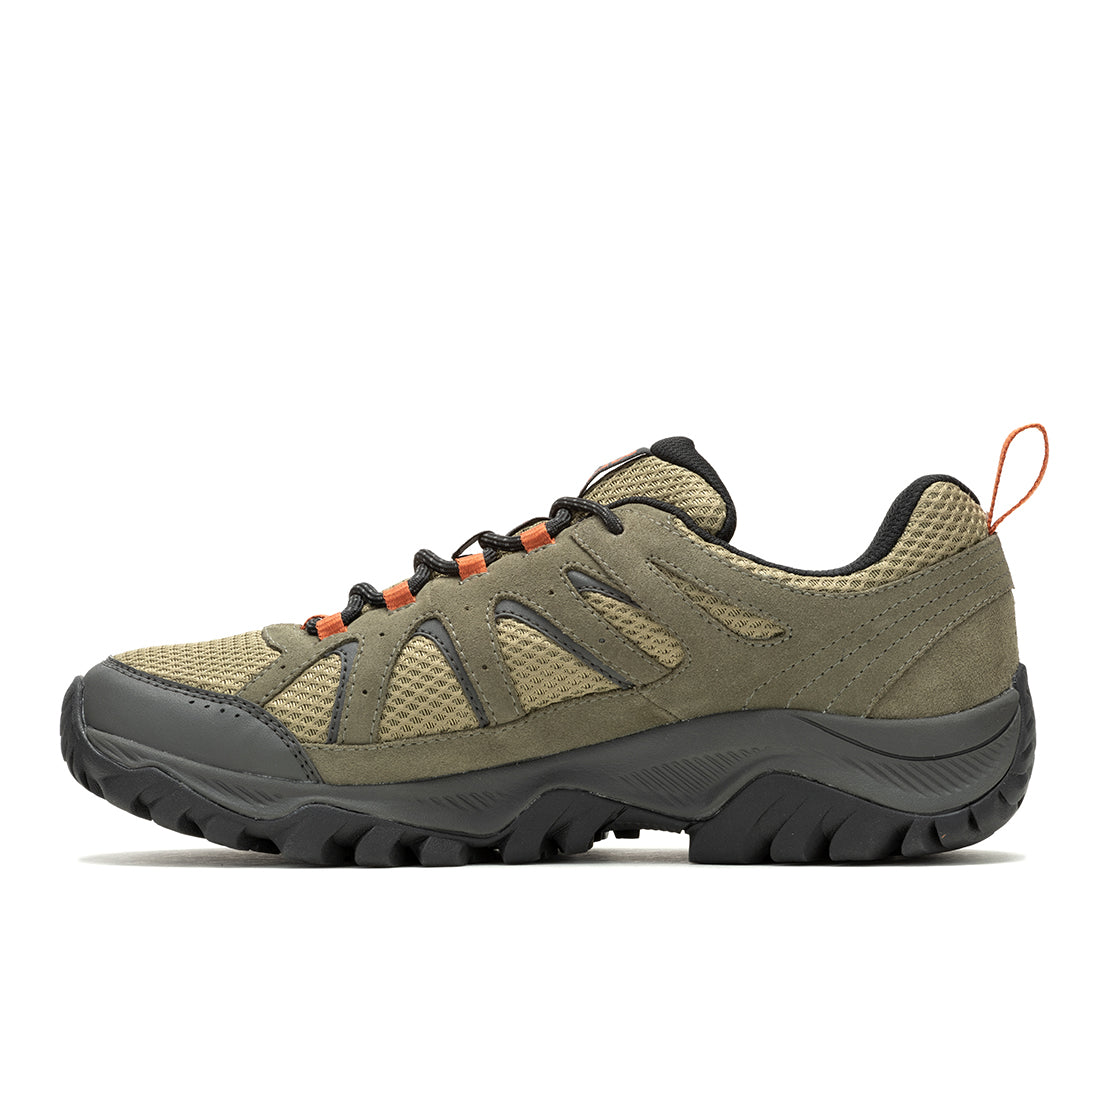 Oakcreek Waterproof-Olive/Clay Mens Hiking Shoes - 0